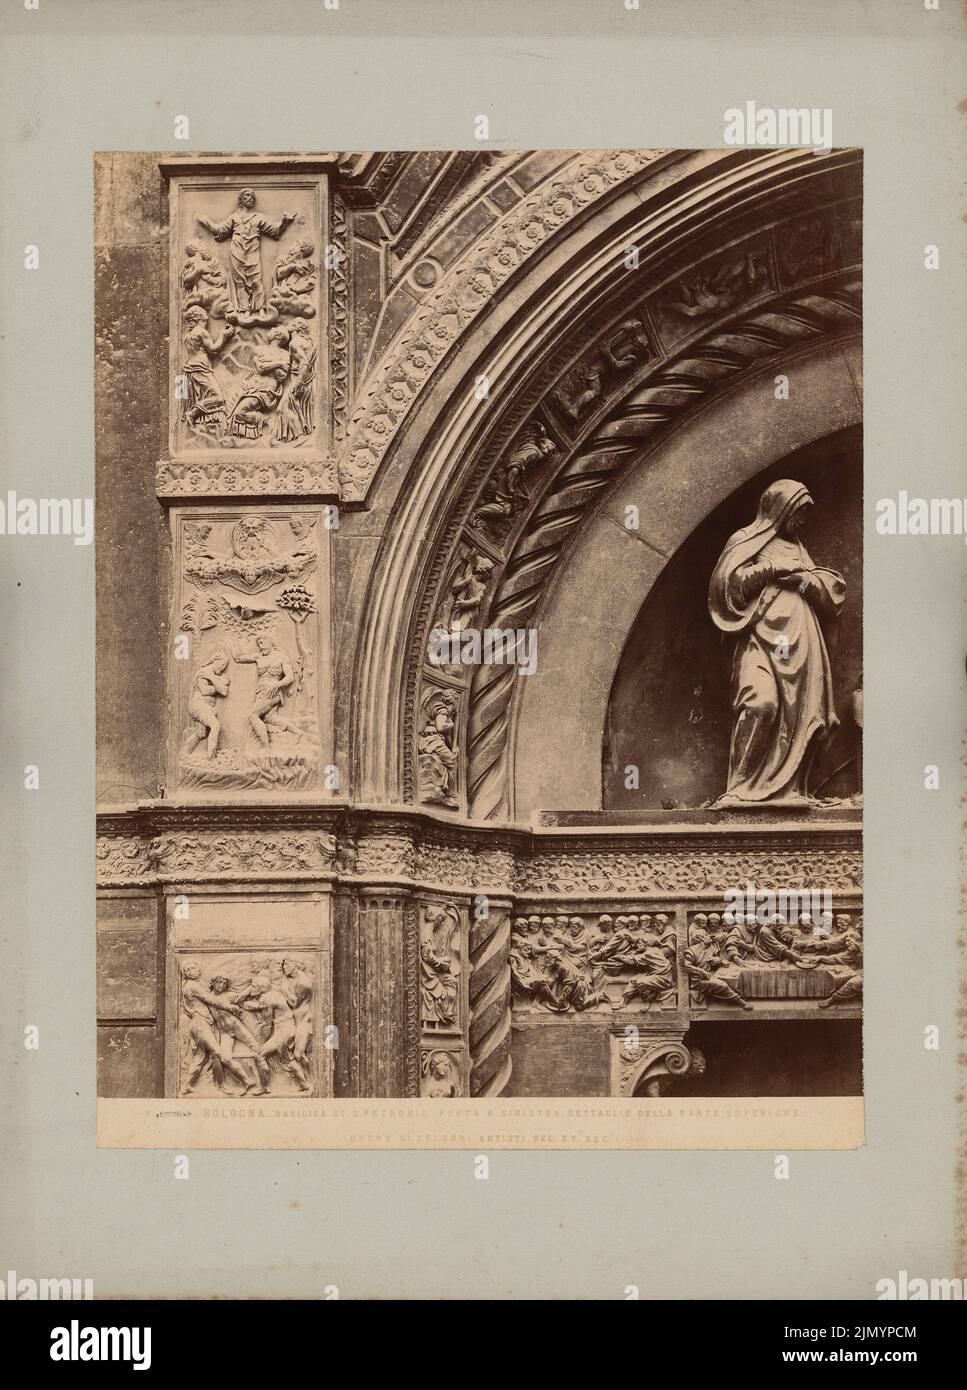 Alinari, Basilica di S. Petronio, Bologna (ohne dat.): Detail des Supraports des linken Portals. Foto auf Karton, 32,4 x 24,1 cm (einschließlich Scankanten) Stockfoto